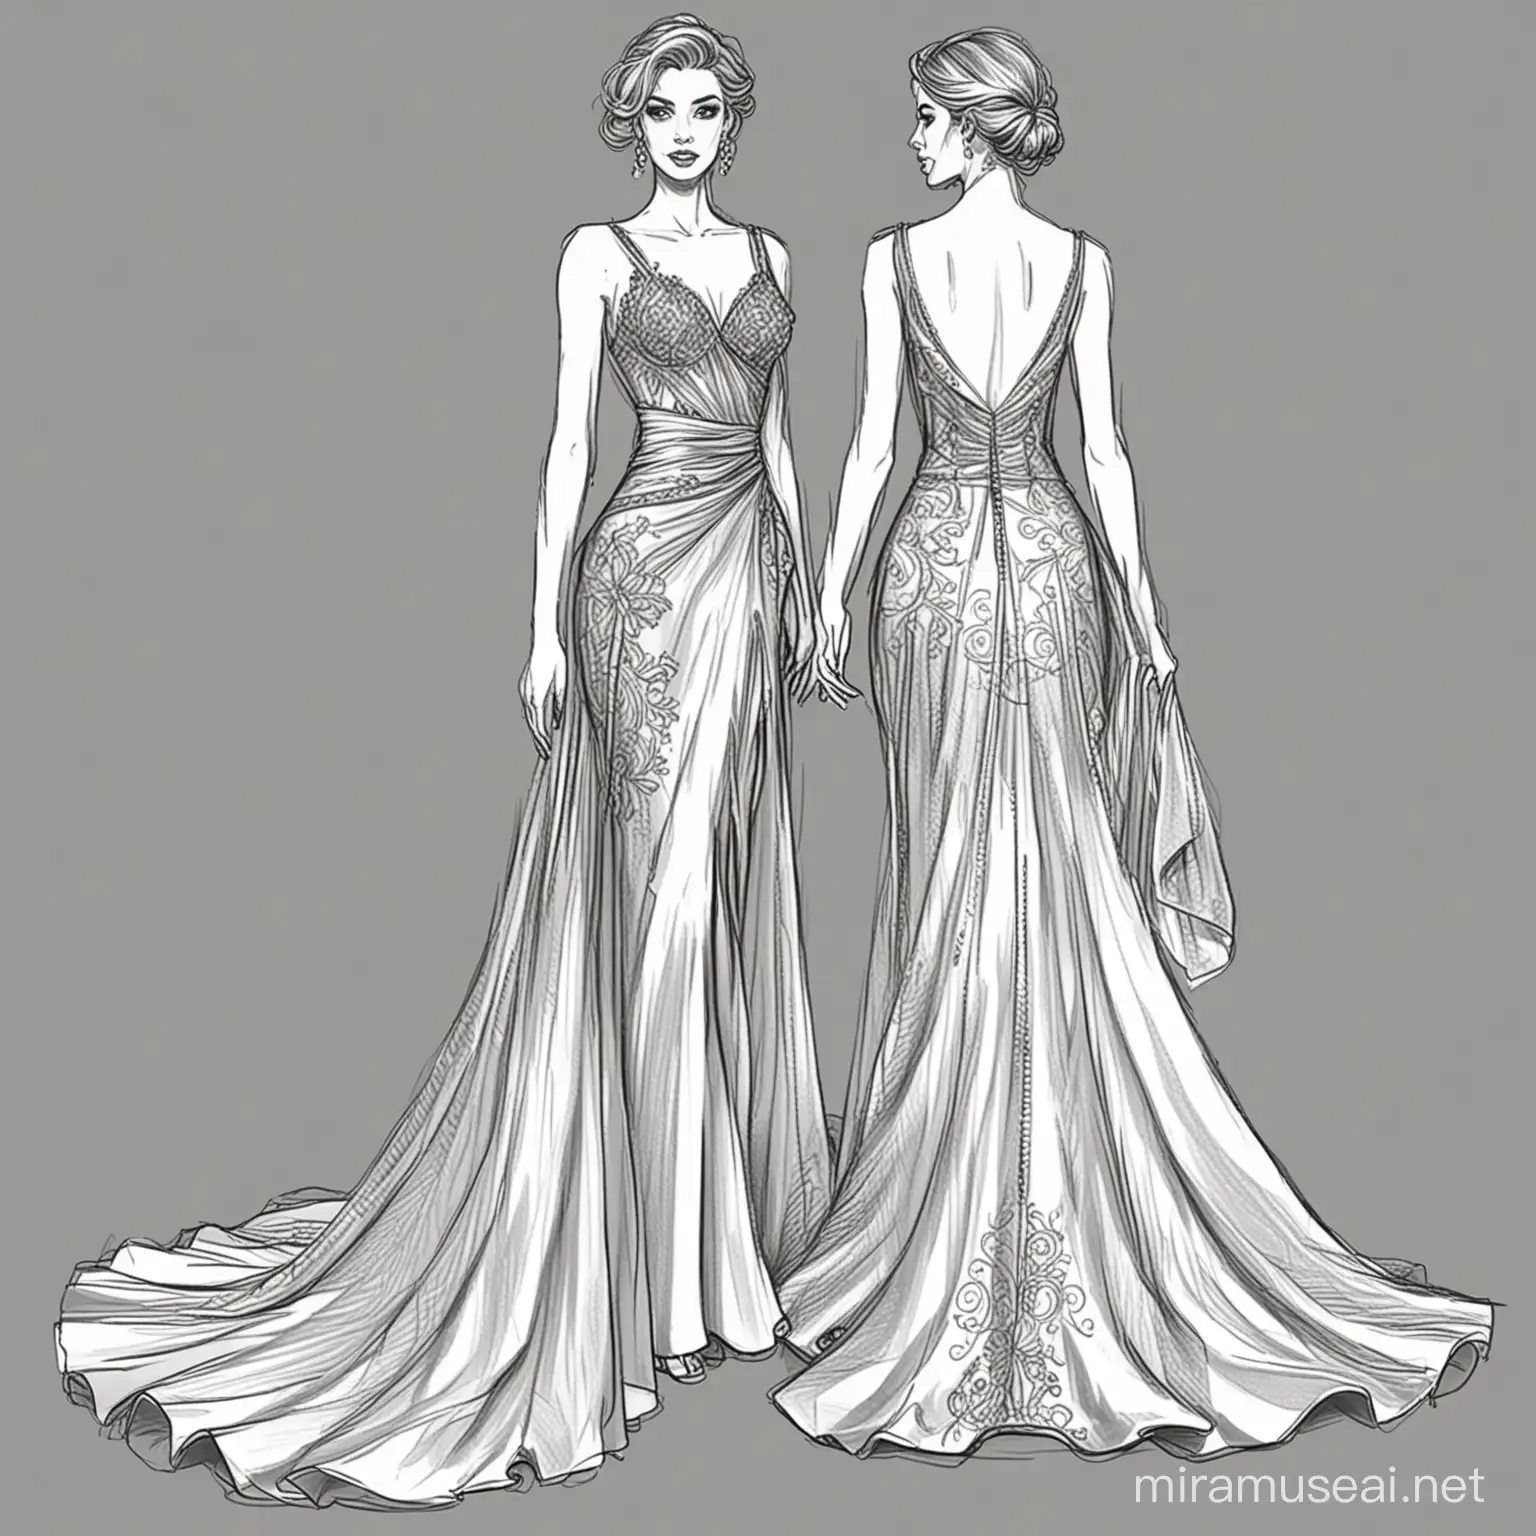 Elegant Evening Gown Fashion Illustration in Line Art Style